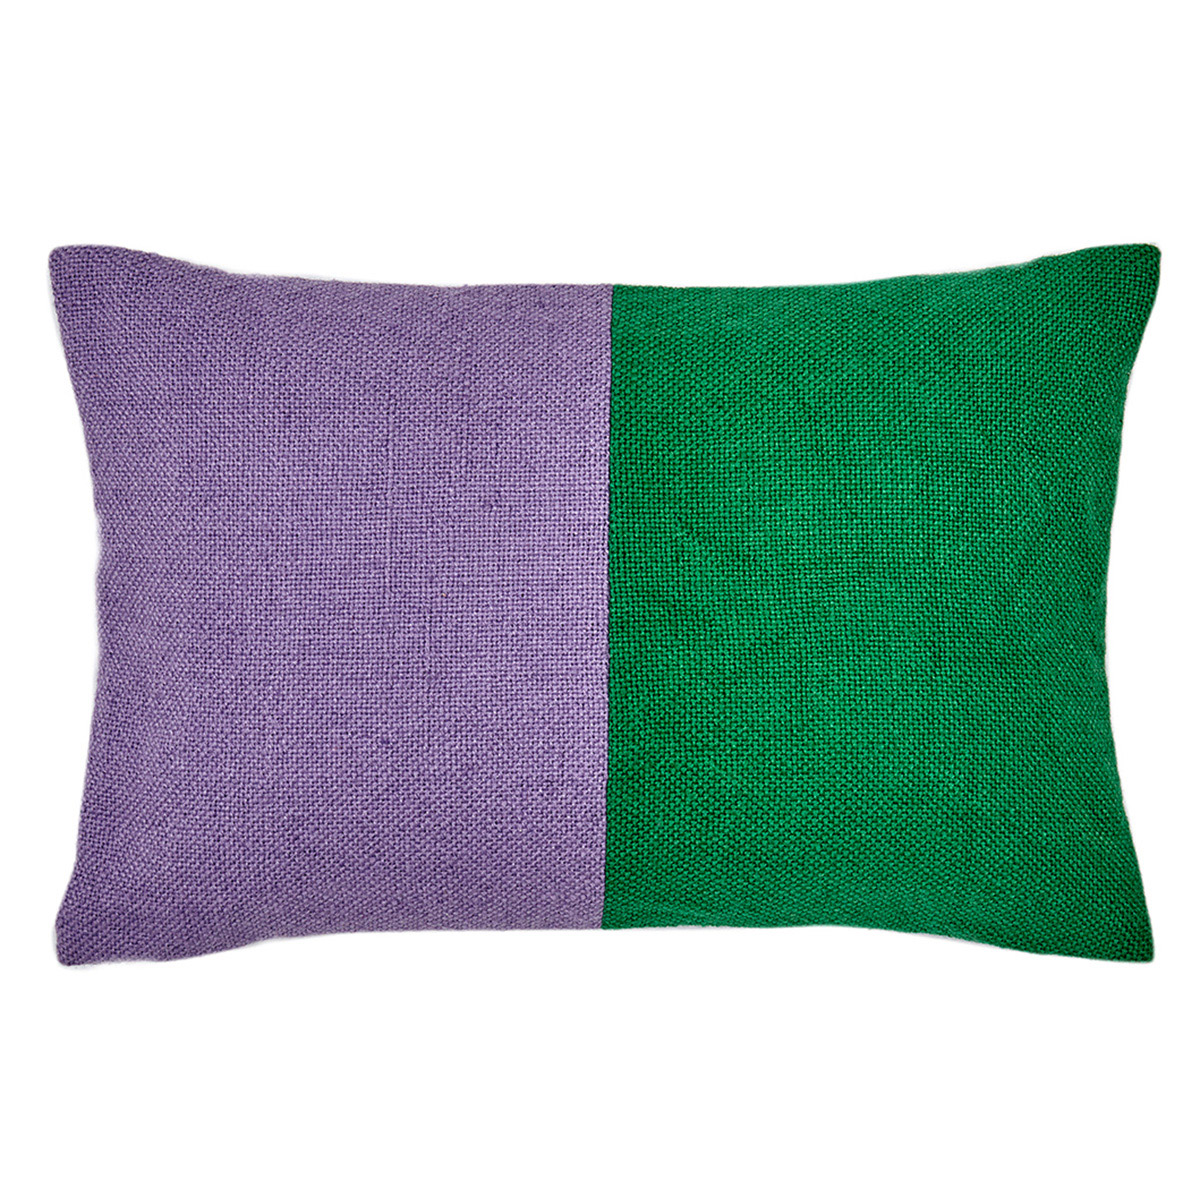 Liv Interior PET outdoor cushion, MATCH, green-lavender, 40x60cm